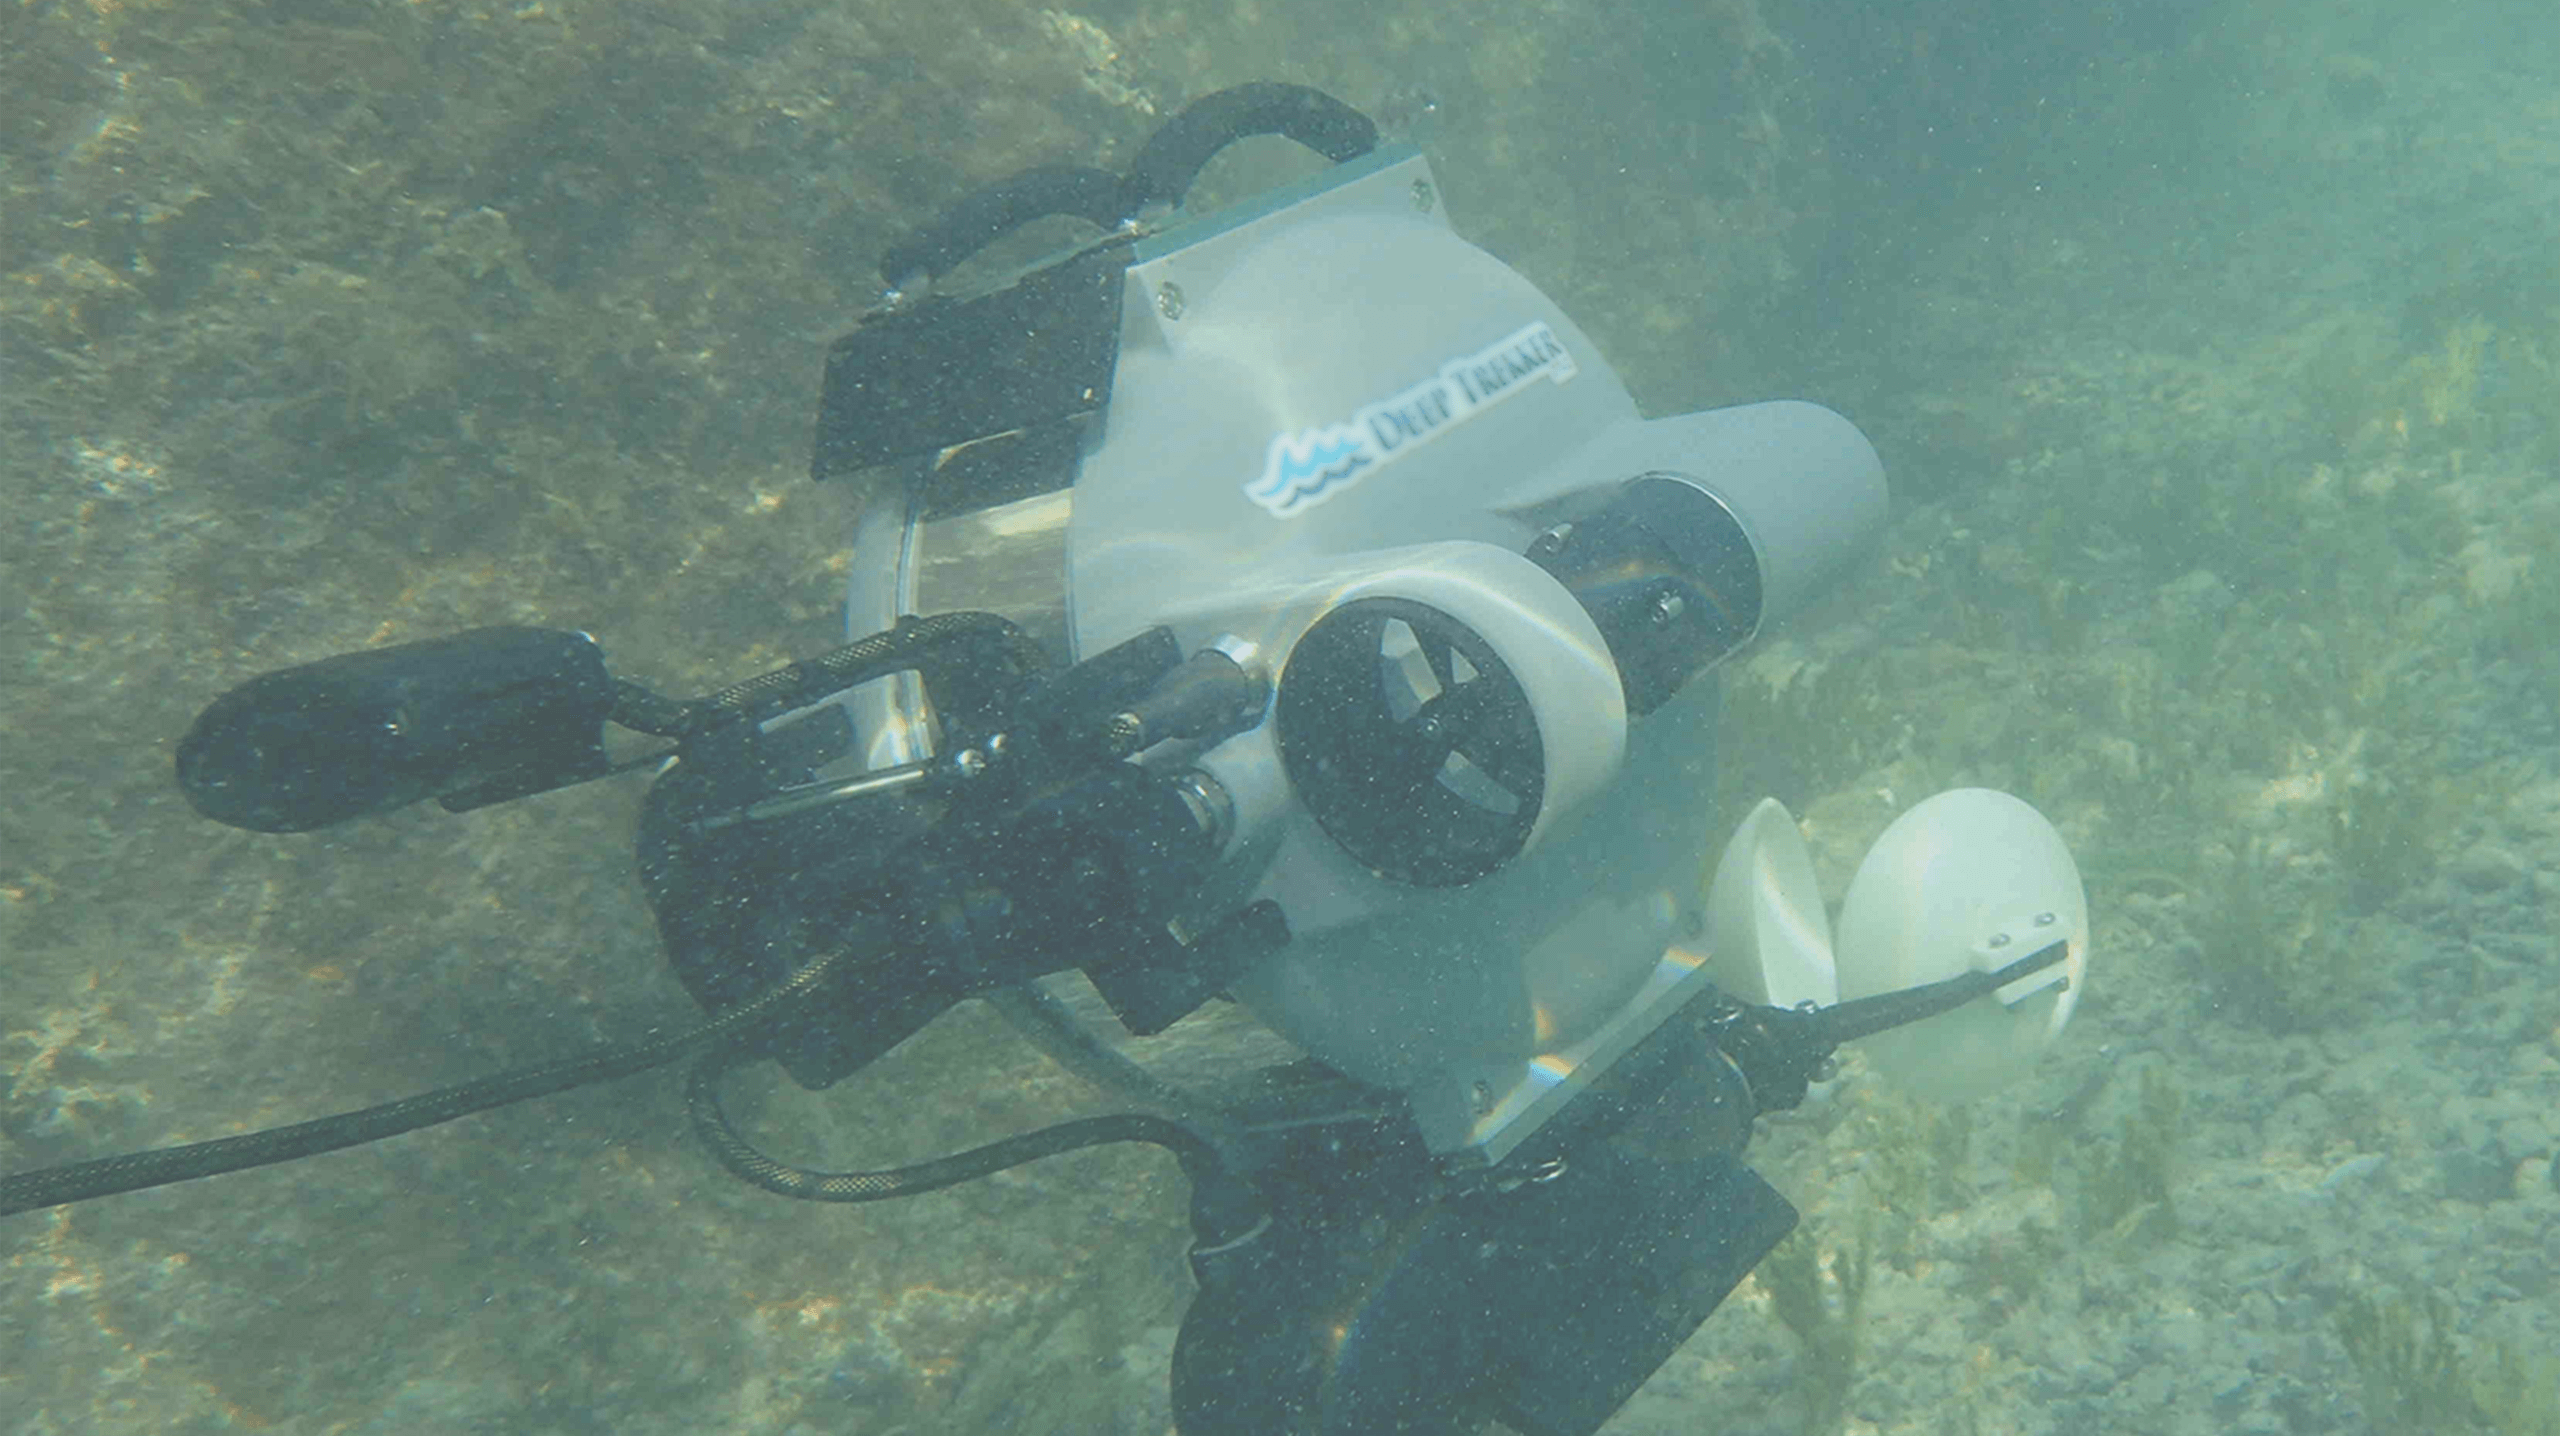 underwater dtg3 with sampler